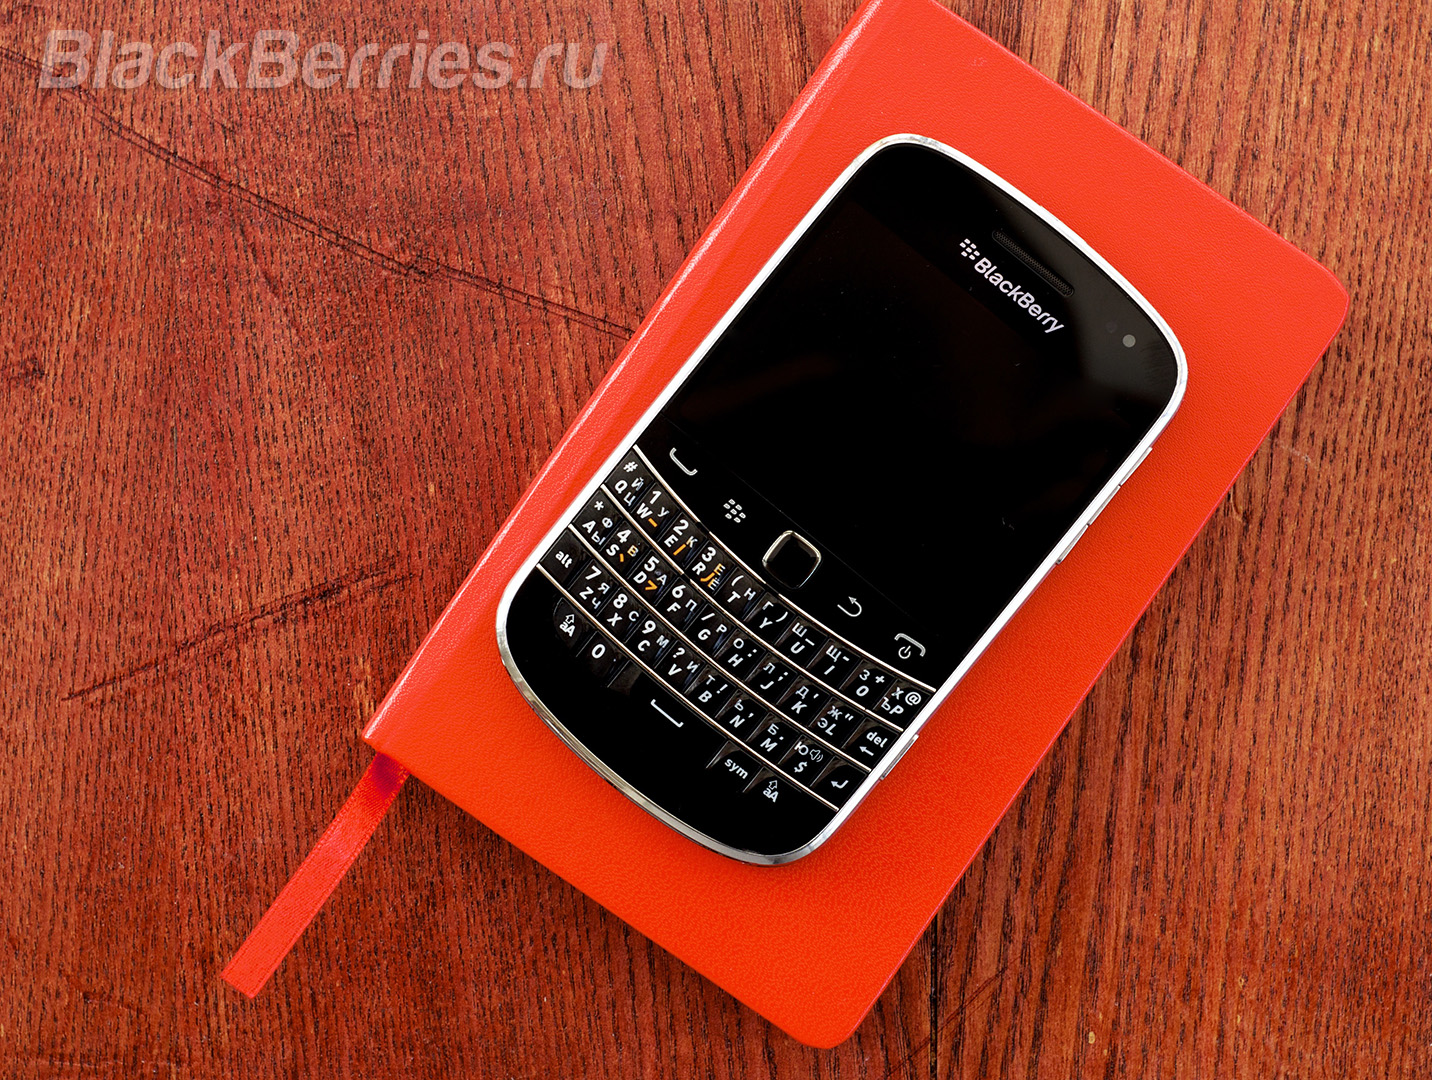 BlackBerry-9900